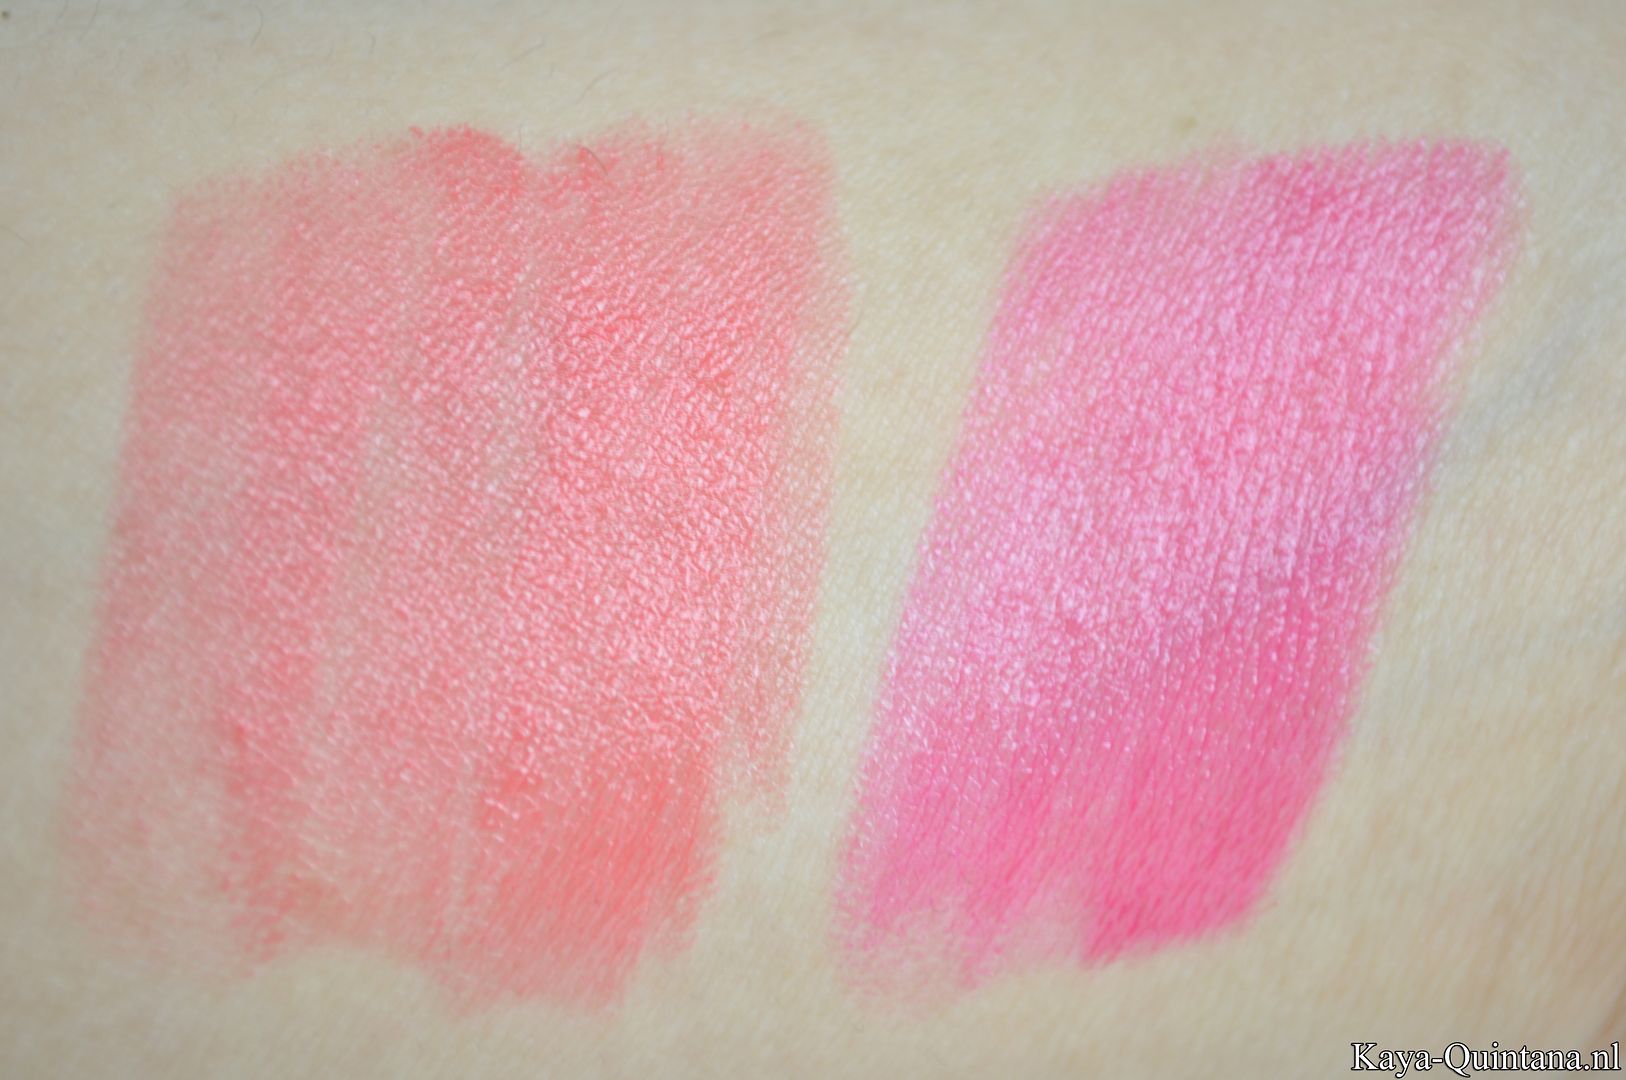 Bourjois shine edition lipstick swatches 1,2,3, soleil en famous fuchsia